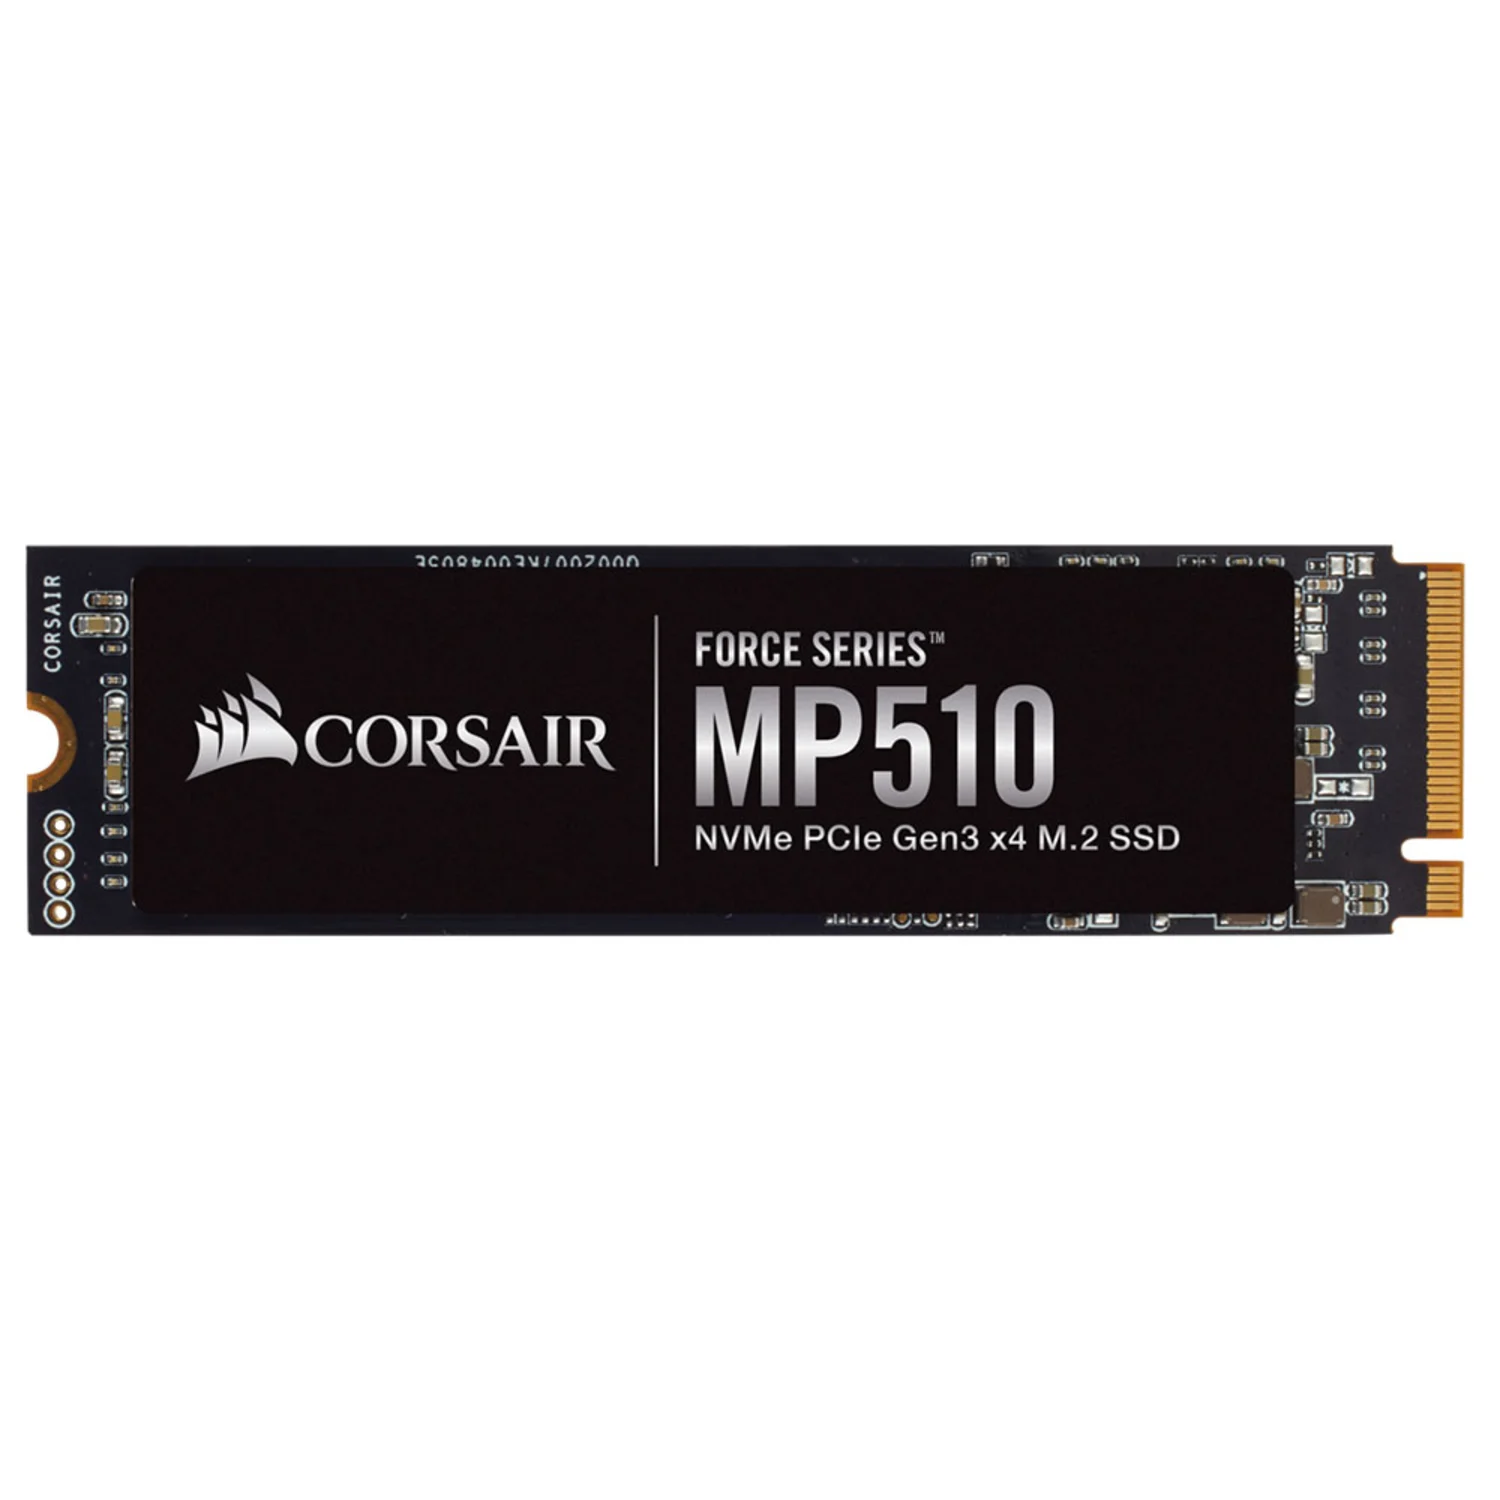 SSD M.2 Corsair MP510 480GB / NVMe PCIe Gen3 - (F480GBMP510B)